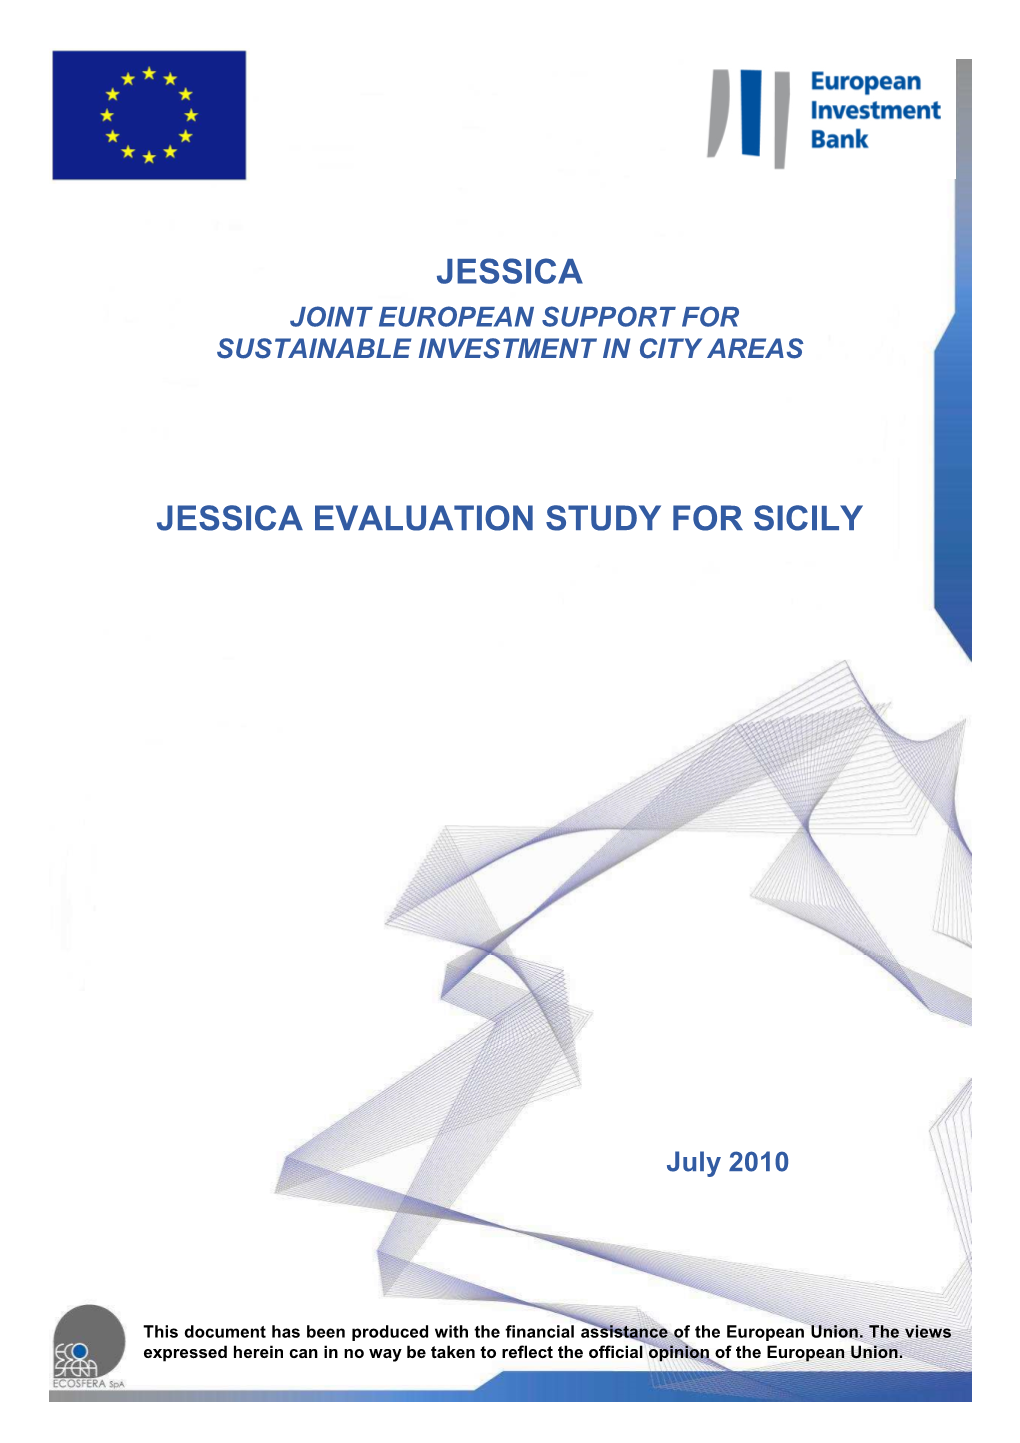 Jessica Evaluation Study for Sicily